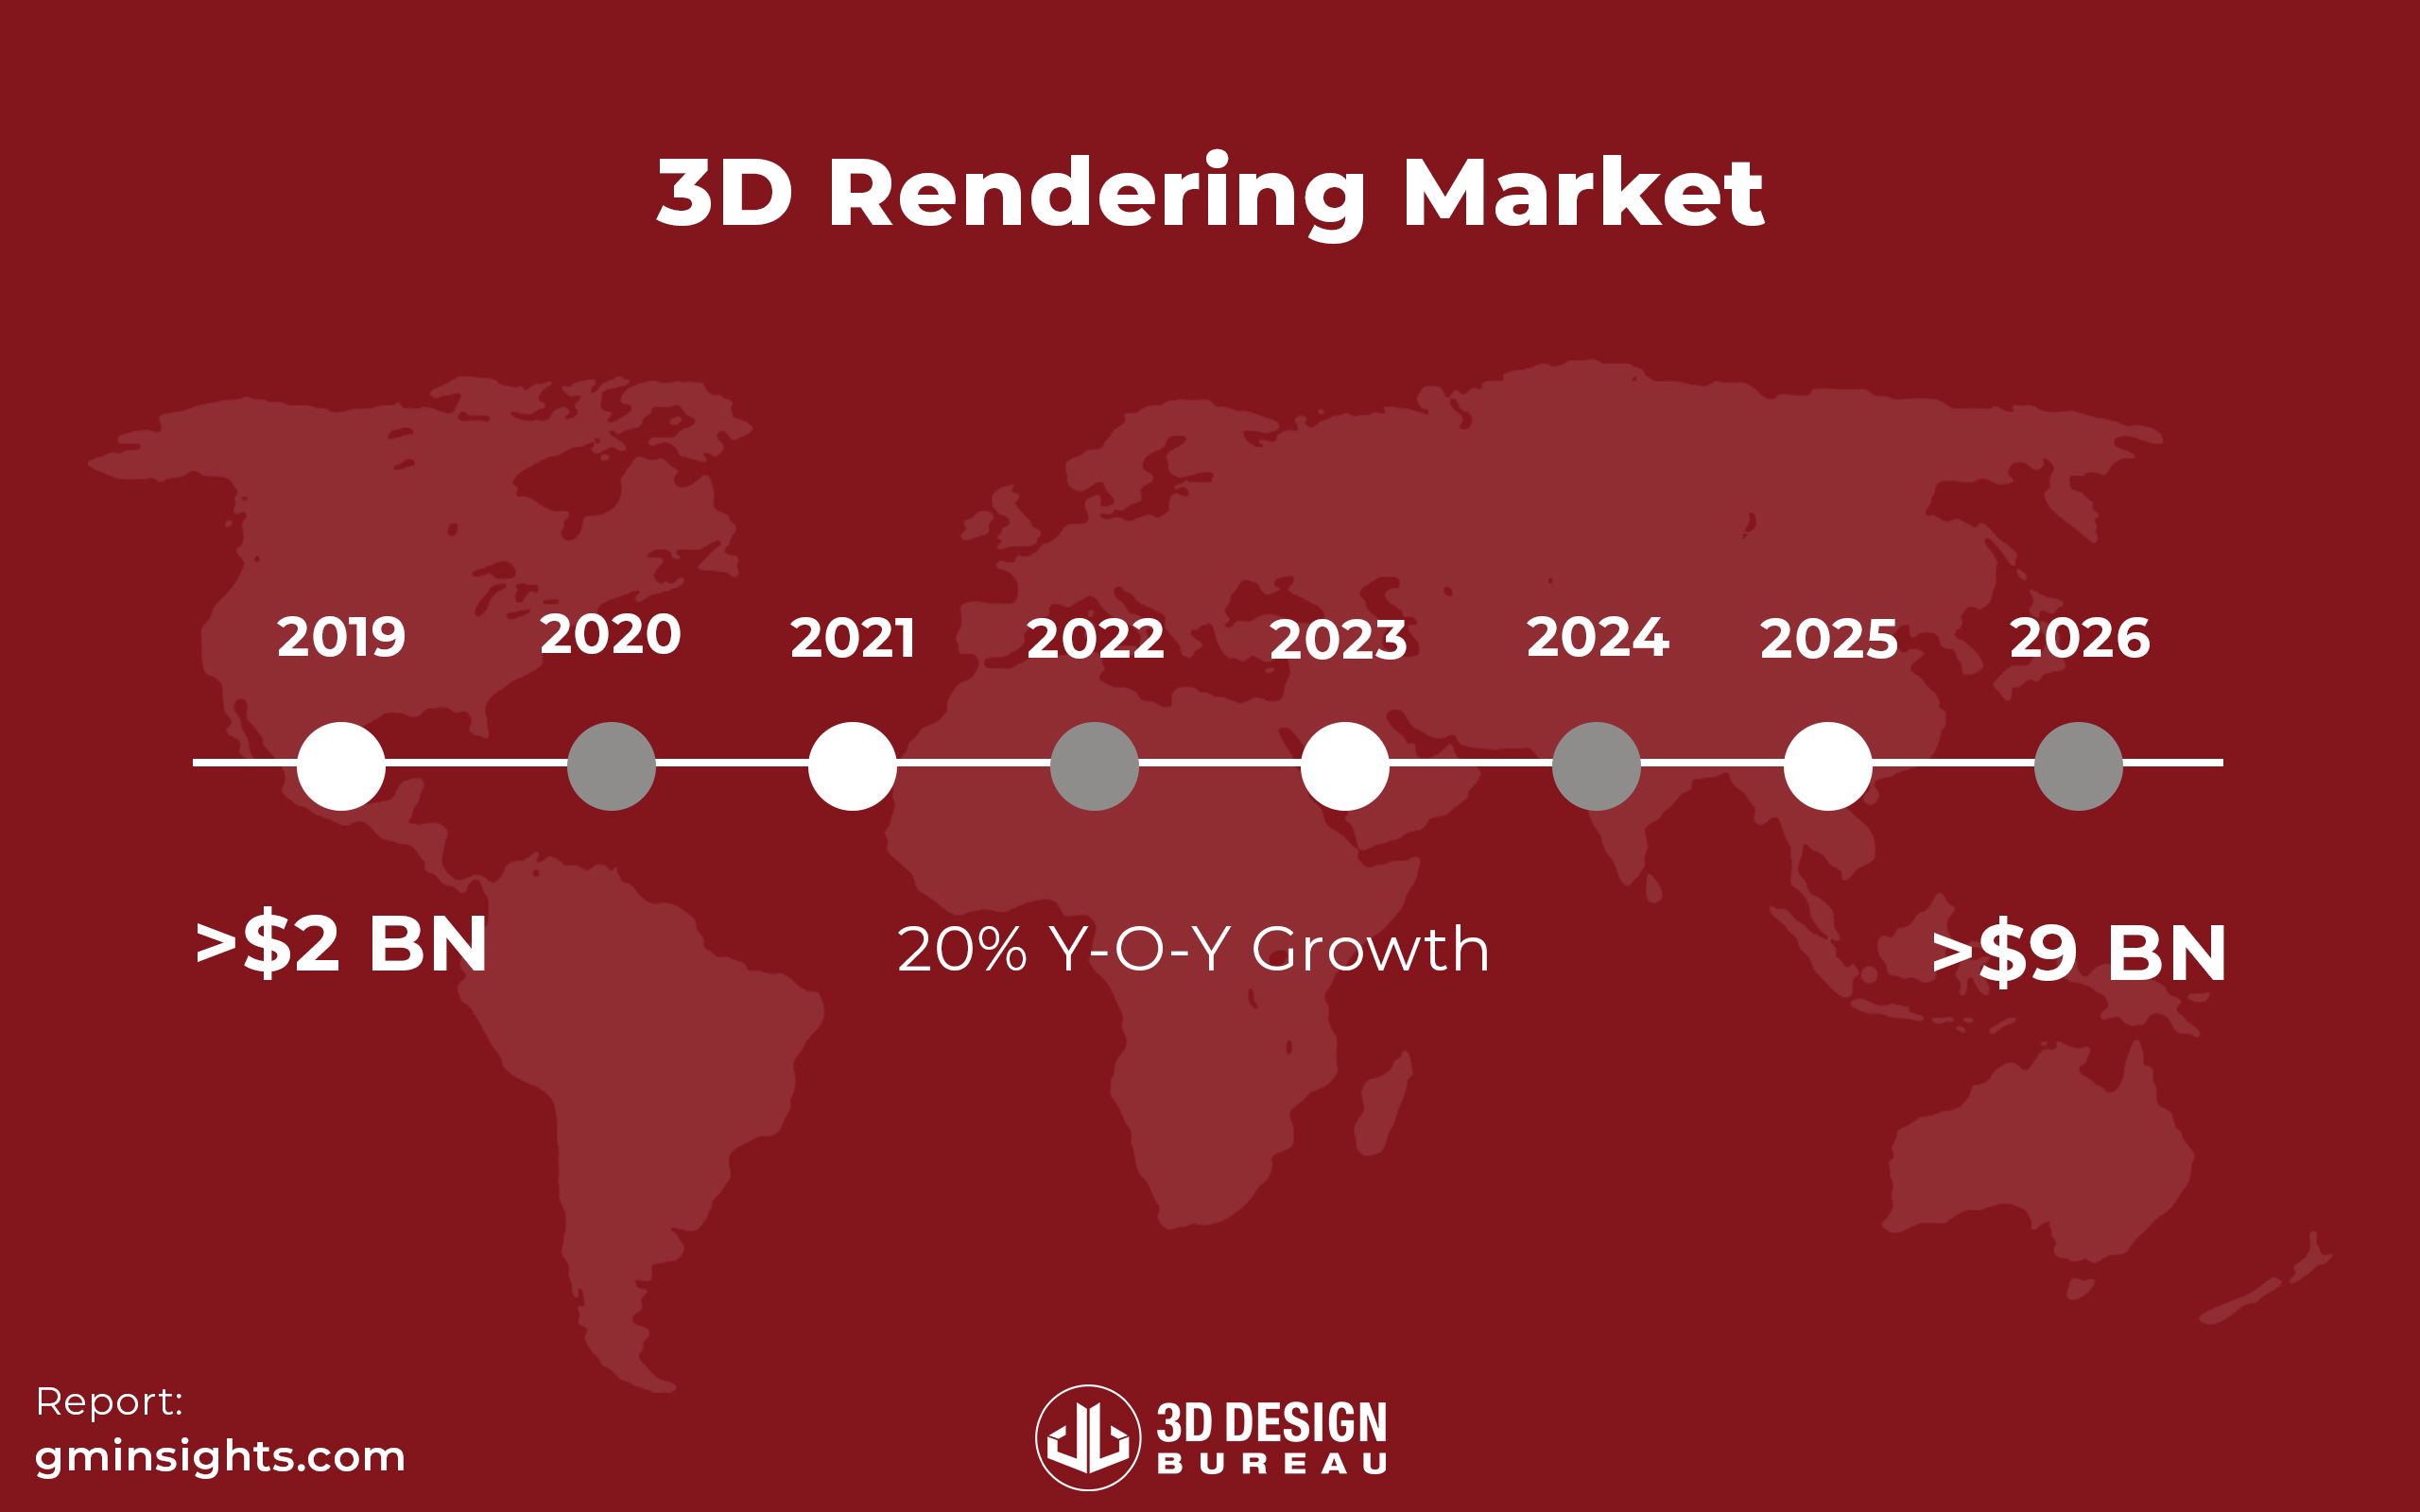 3D Rendering Market Projected $9 Billion Value 2026